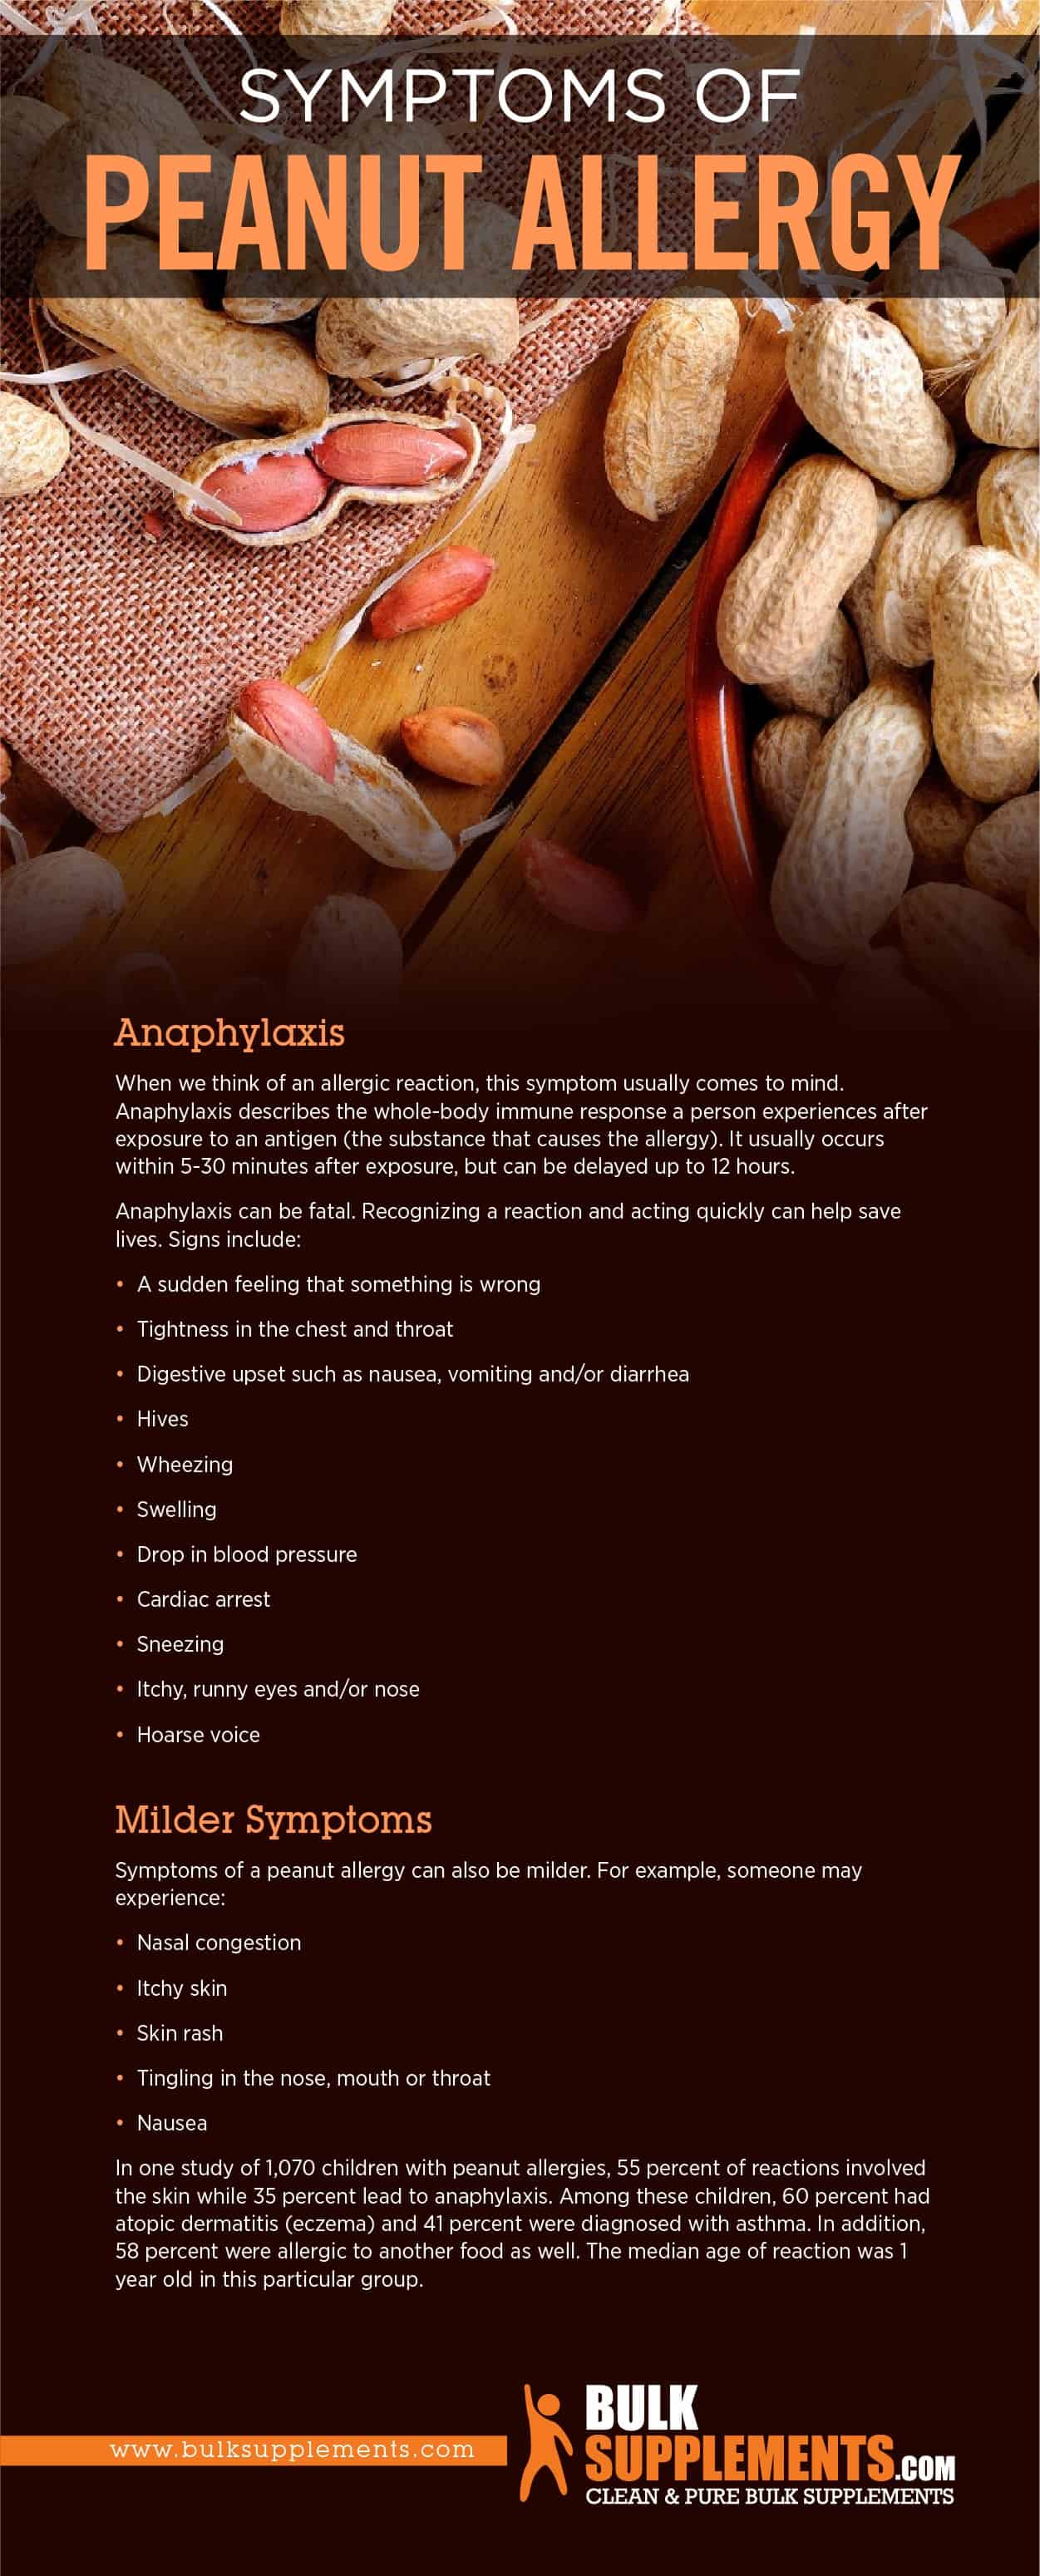 Symptoms of Peanut Allergy